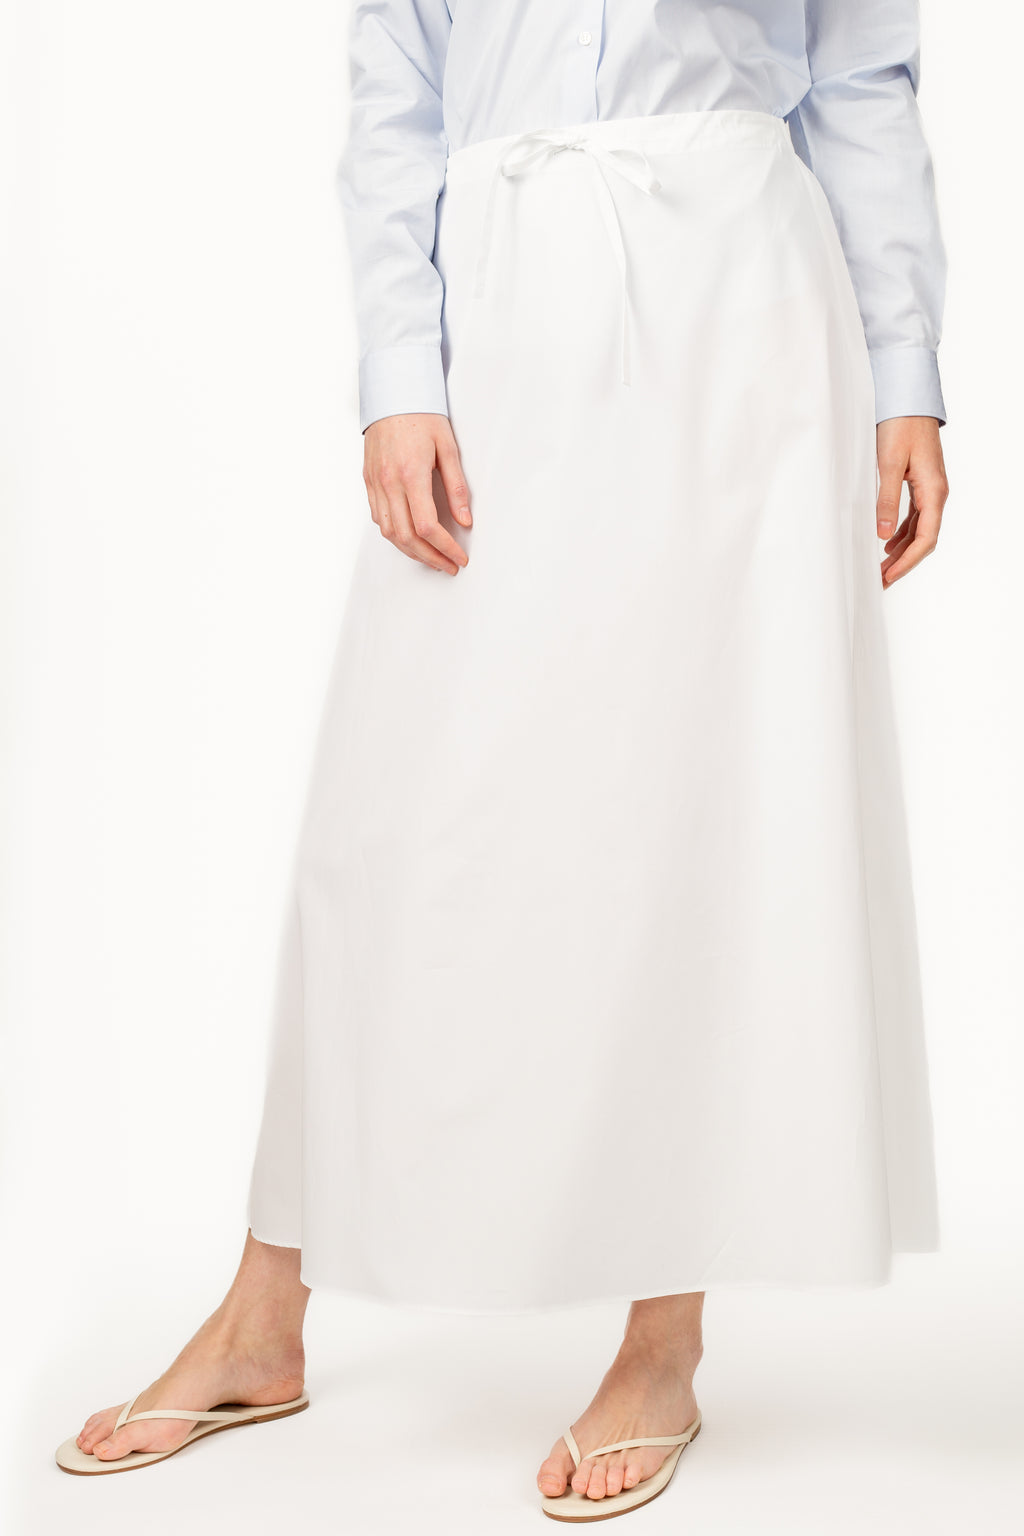 The Long Skirt White Cotton